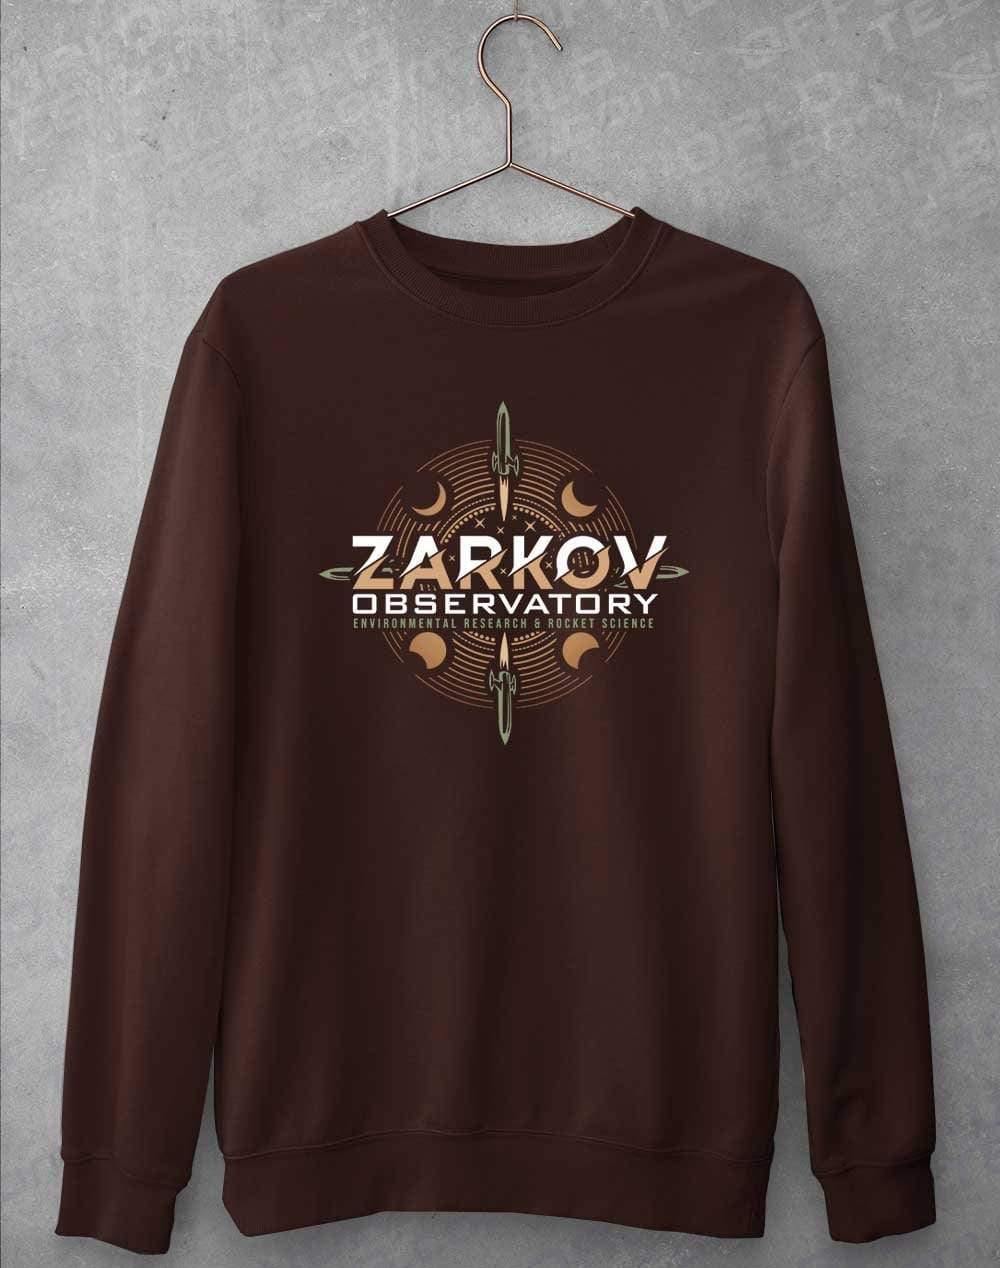 Zarkov Observatory Sweatshirt S / Hot Chocolate  - Off World Tees